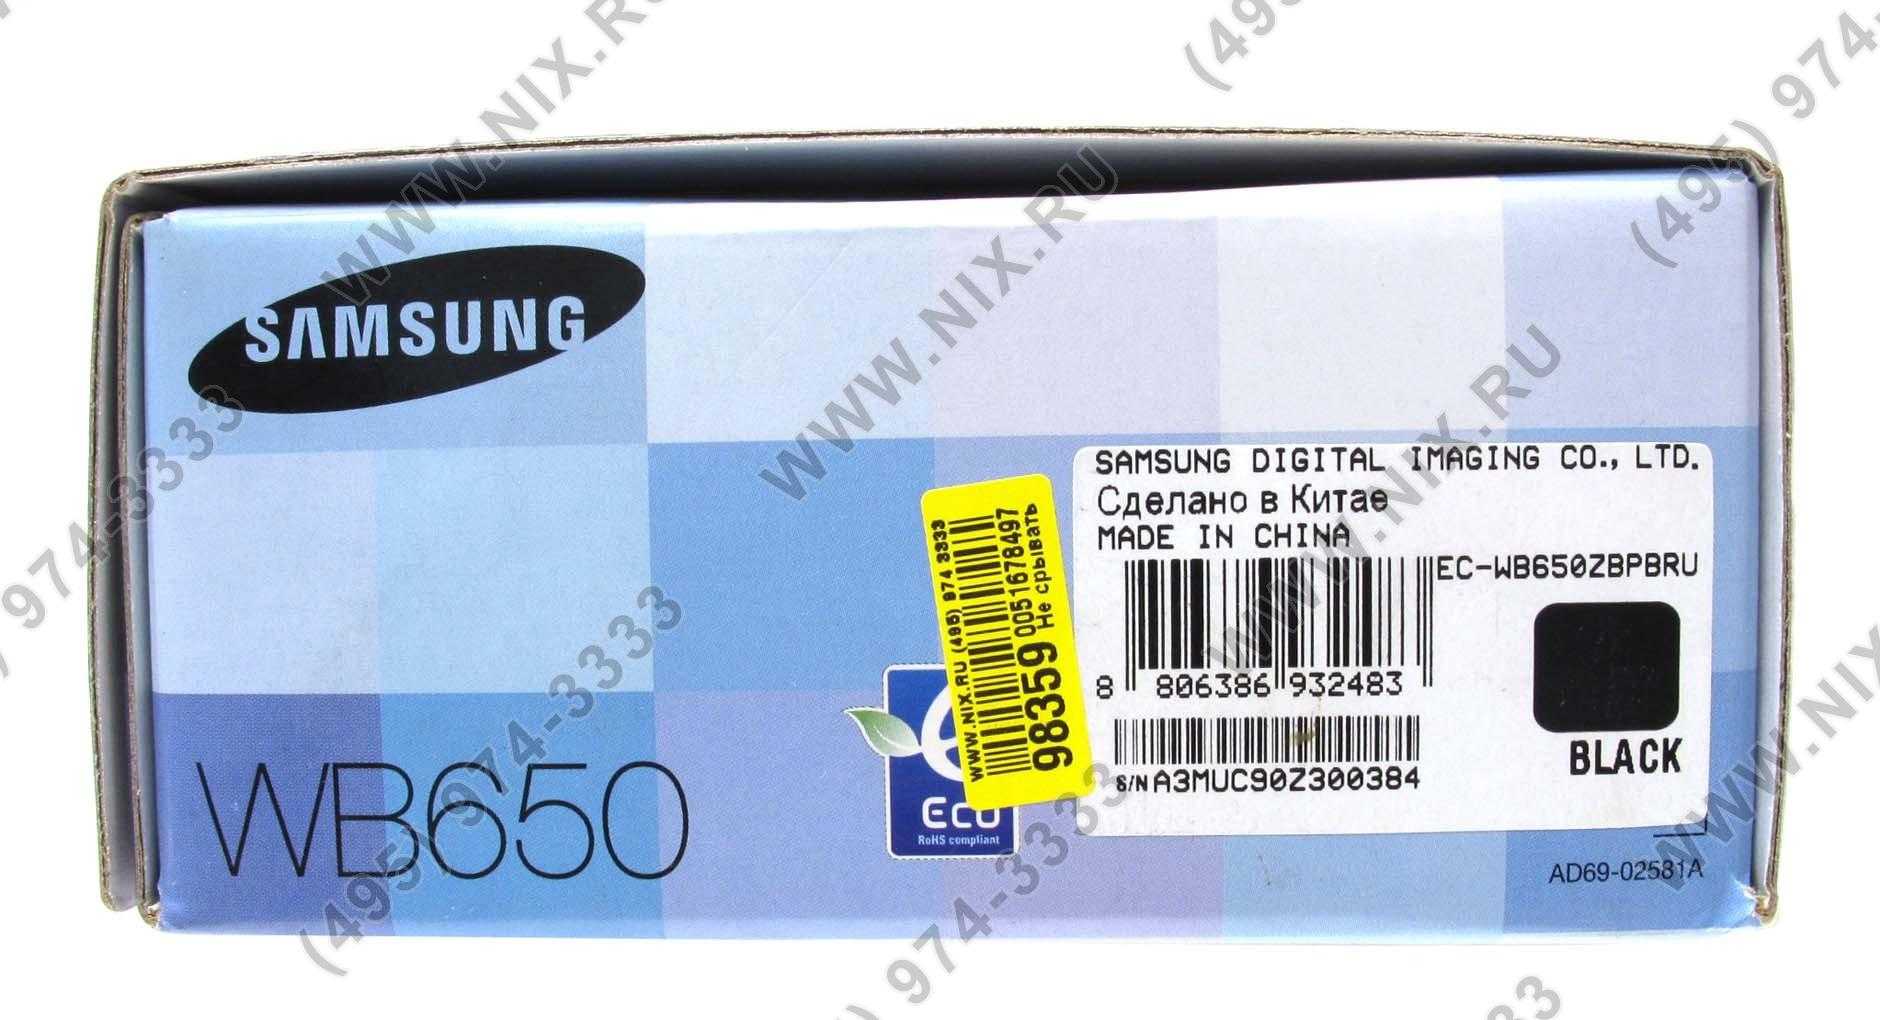 Samsung wb650 - казань